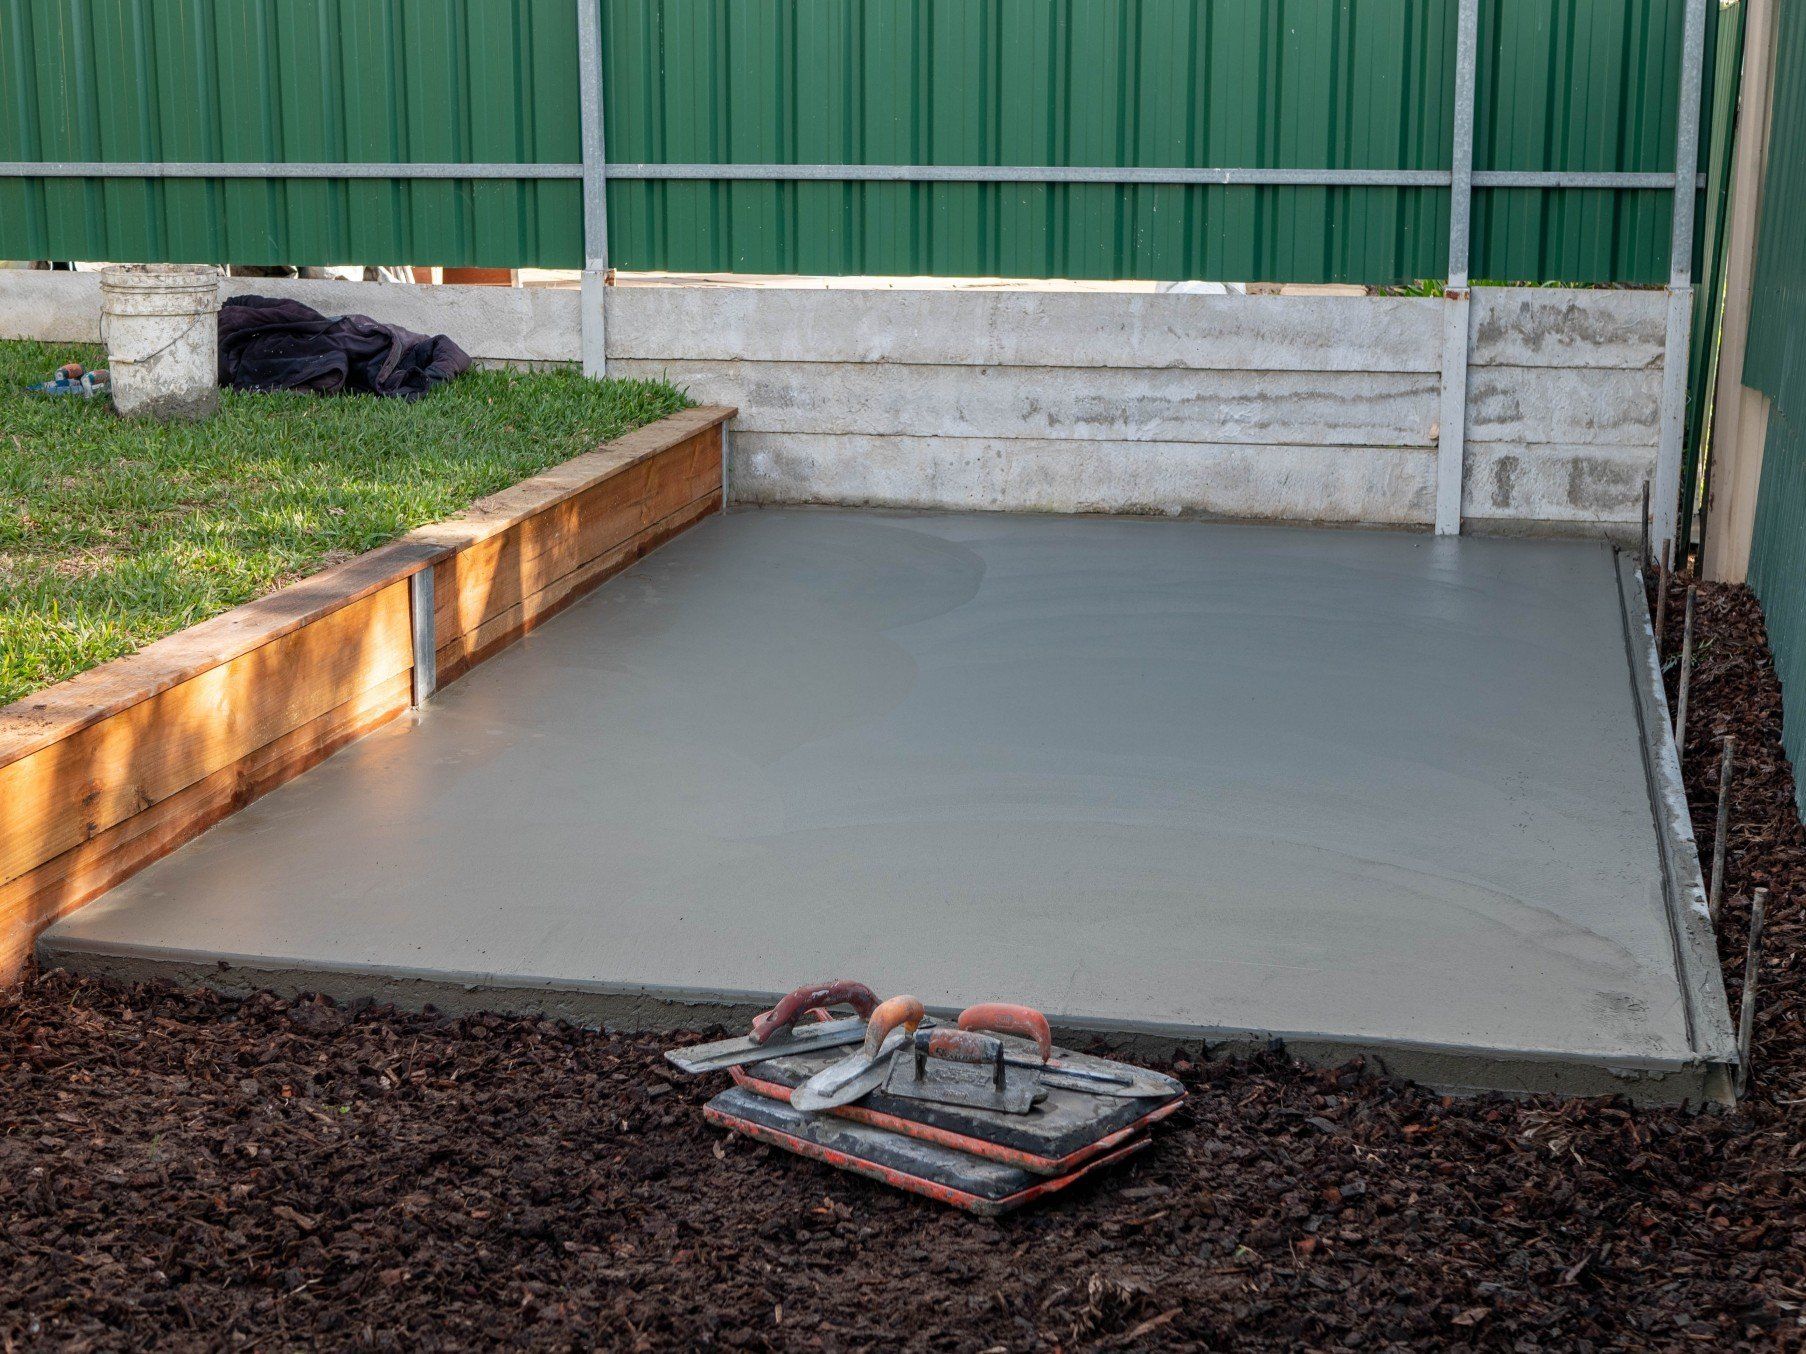 New concrete slab for a 5x5 backyard garden shed for a Mandurah homeowner, WA Aus.